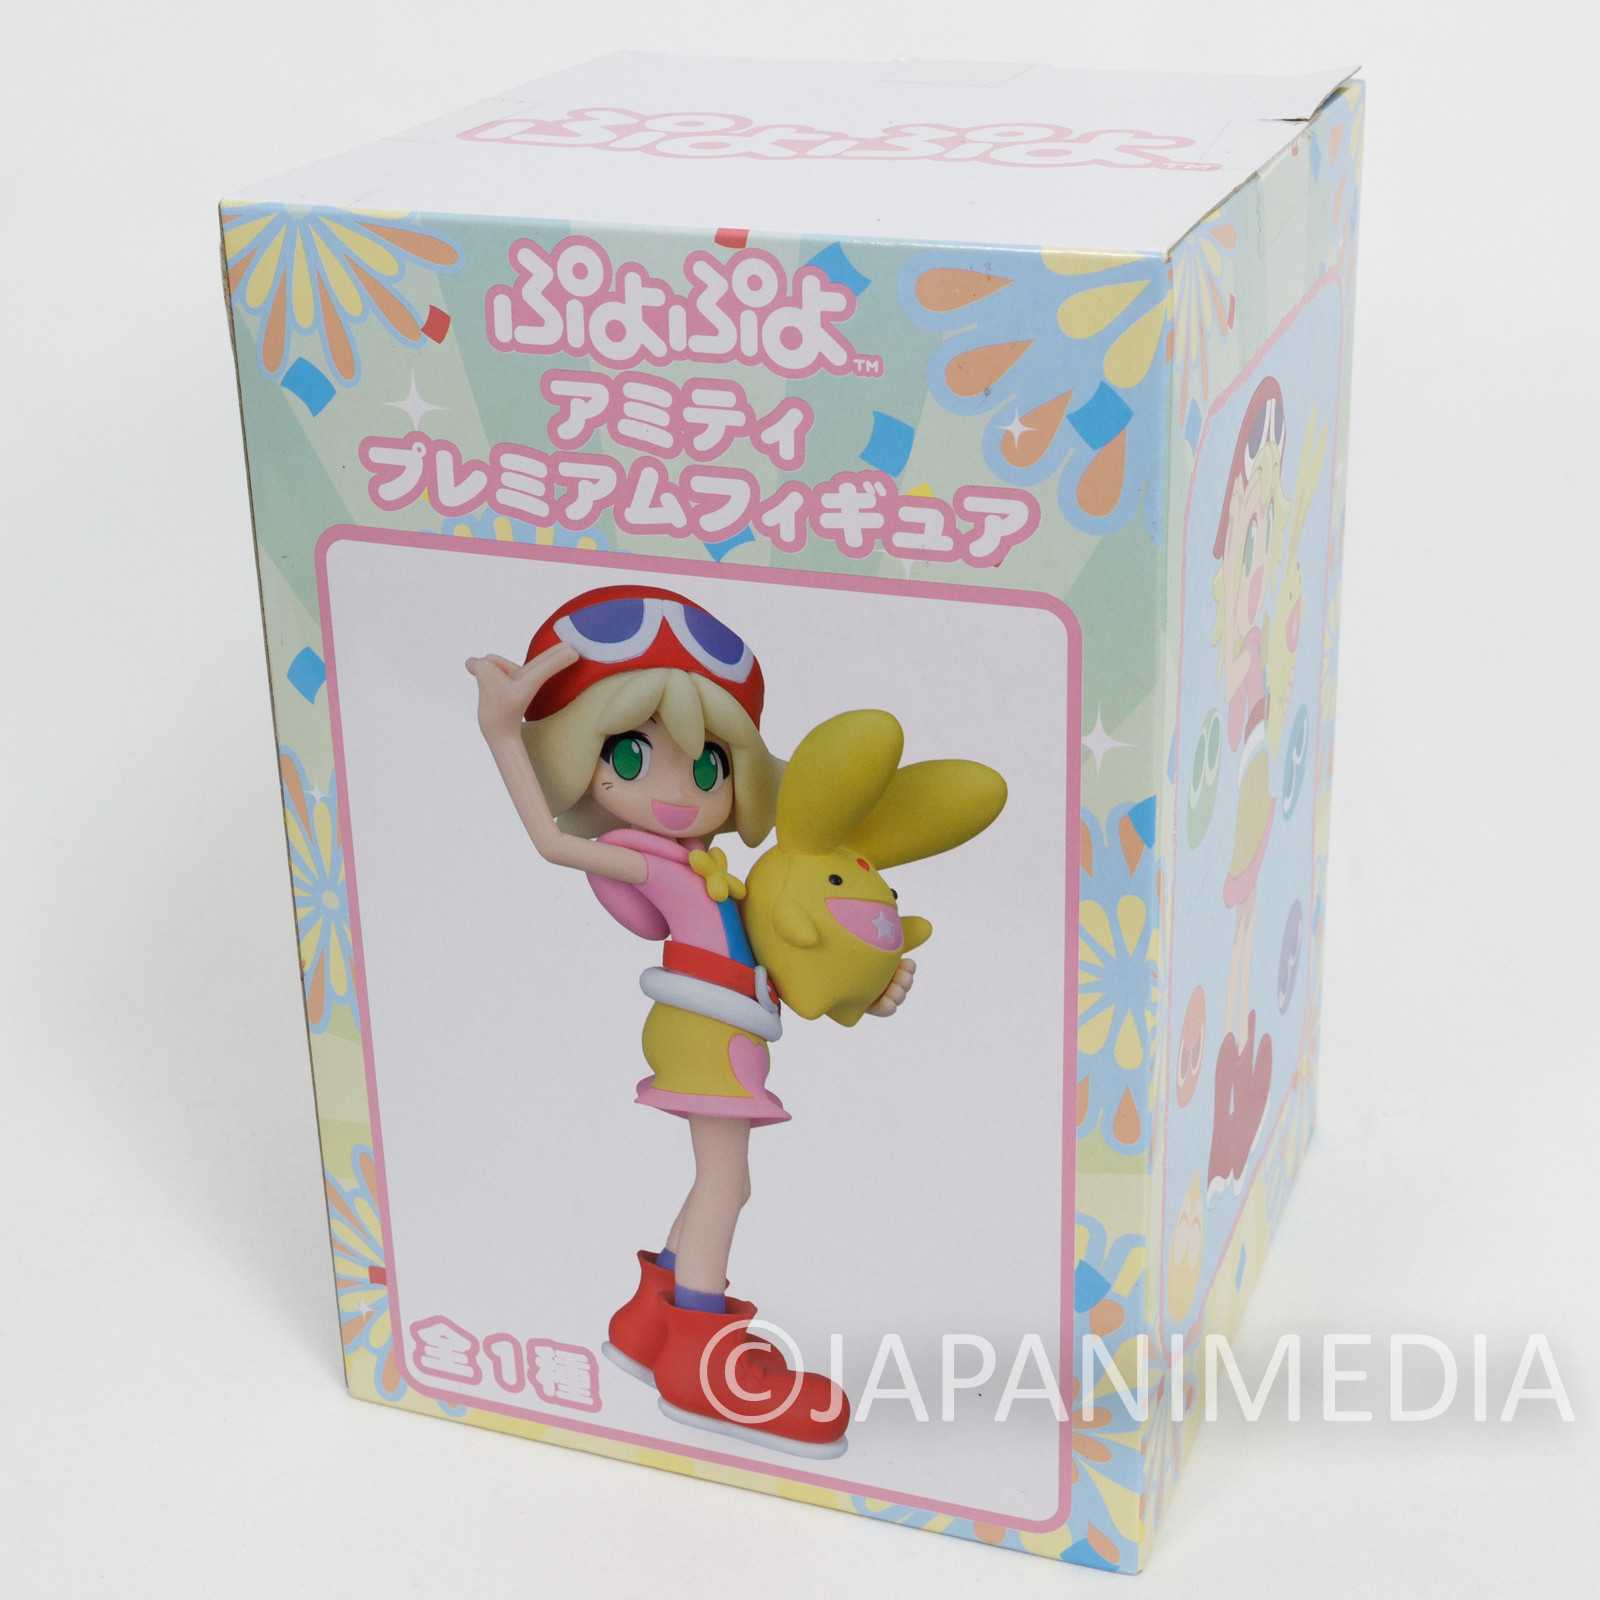 Puyo Puyo Amitie Premium Figure SEGA JAPAN GAME ANIME - Japanimedia Store